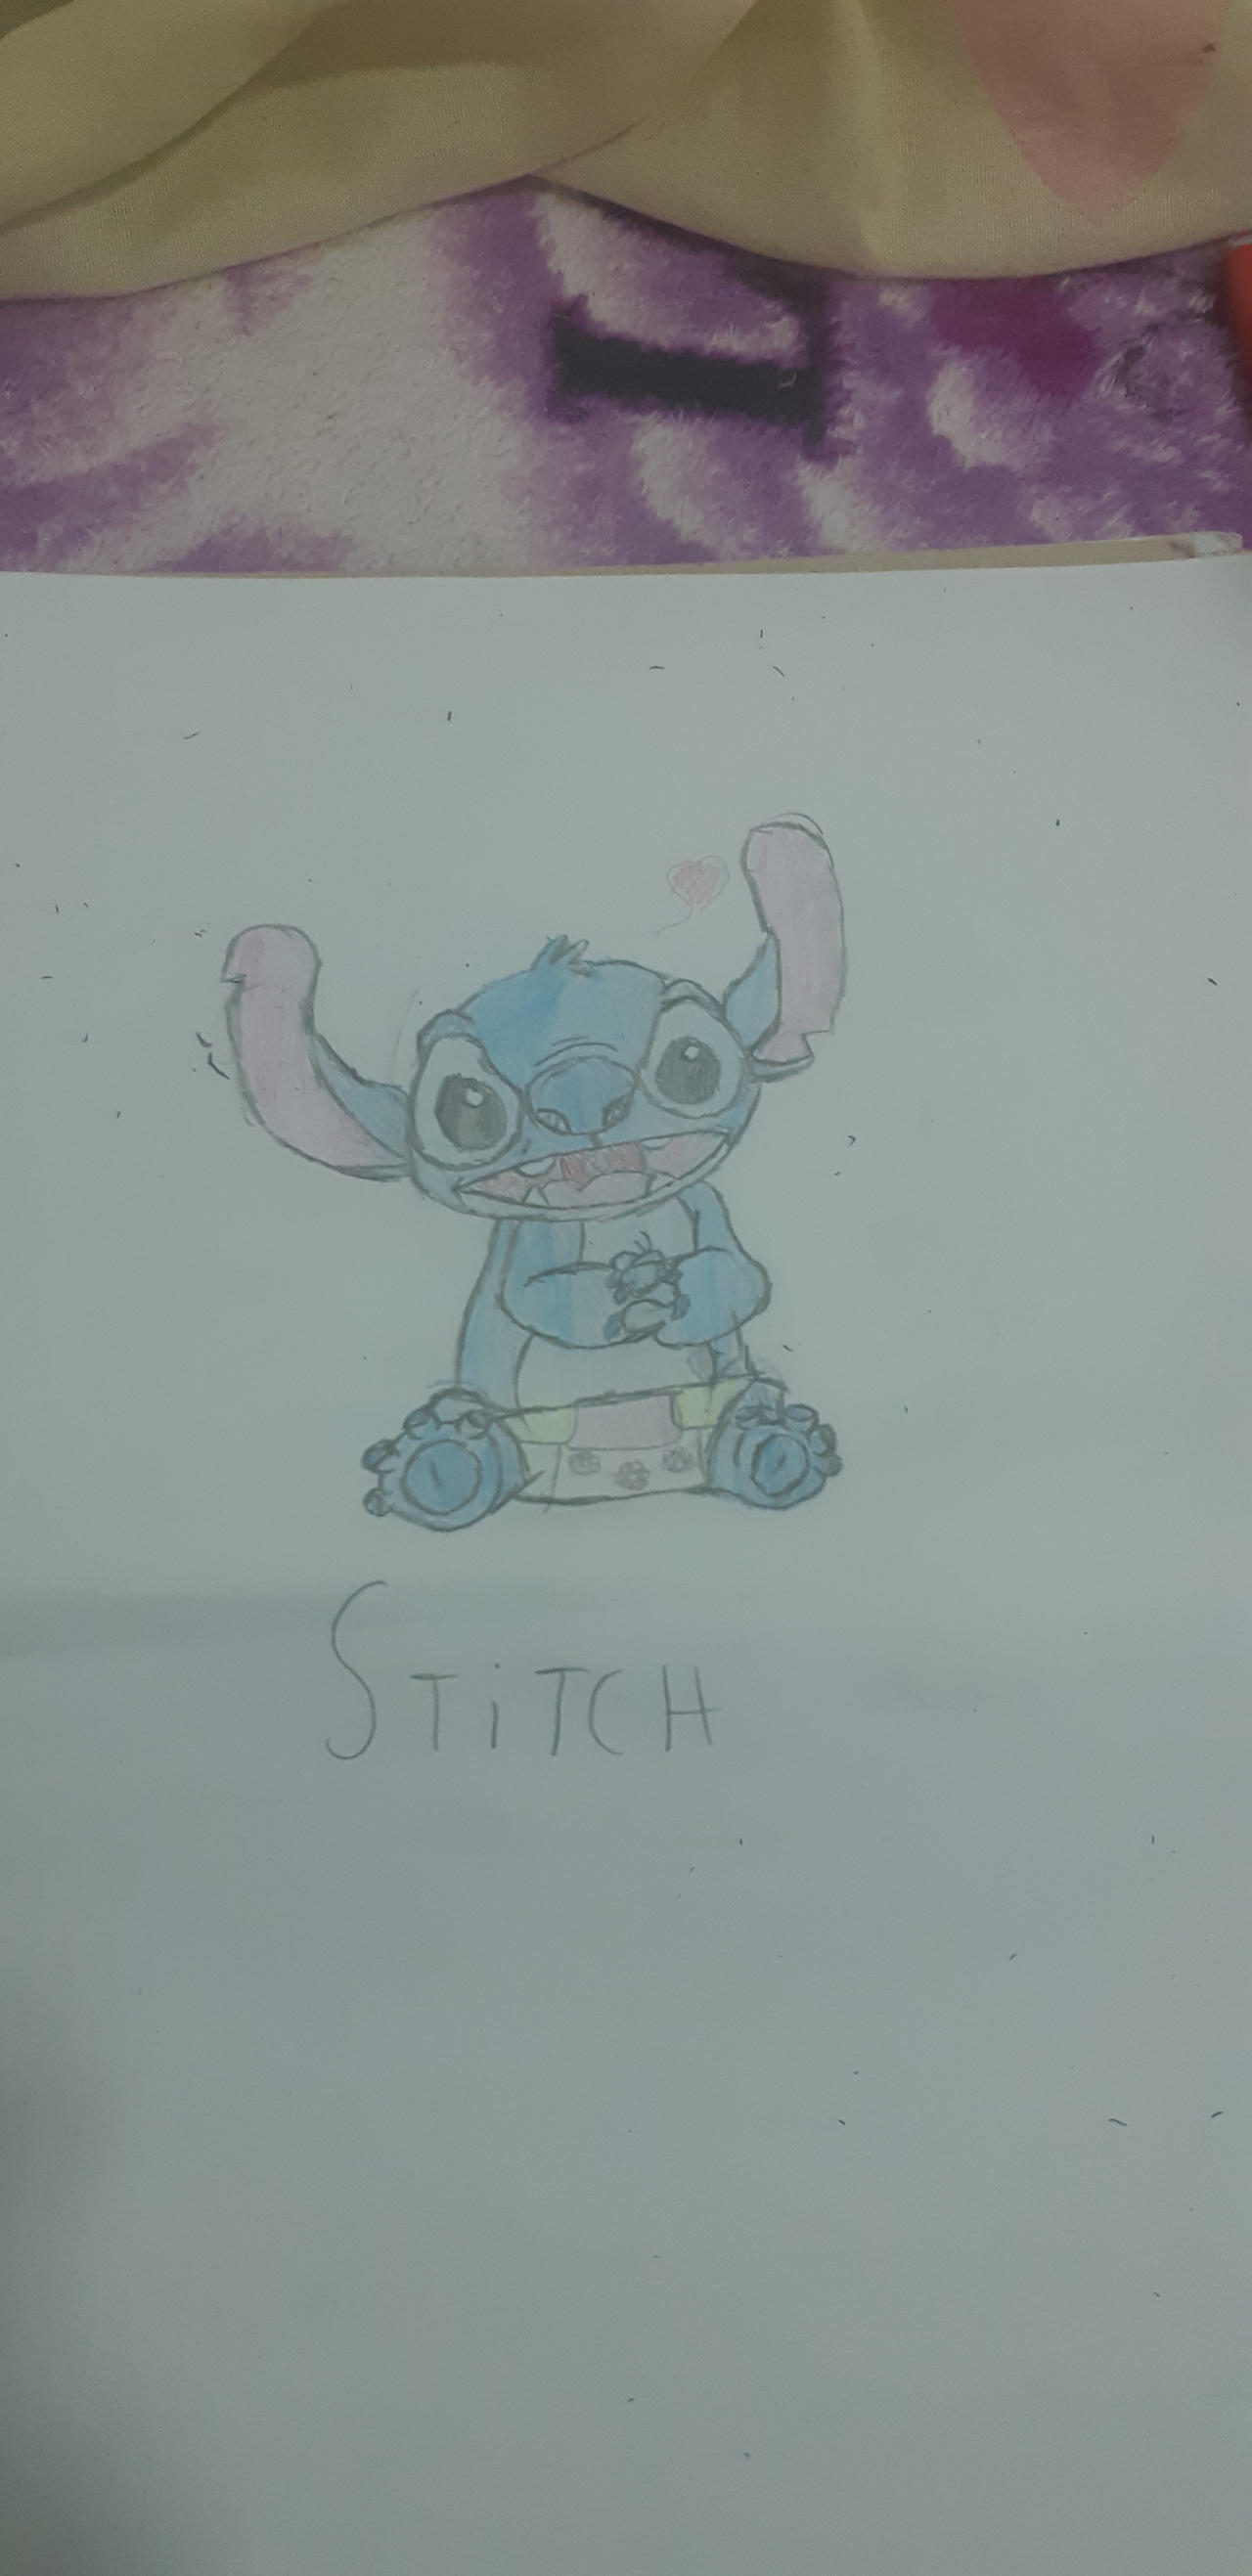 Stitch art by Kojiiiiii1 on DeviantArt